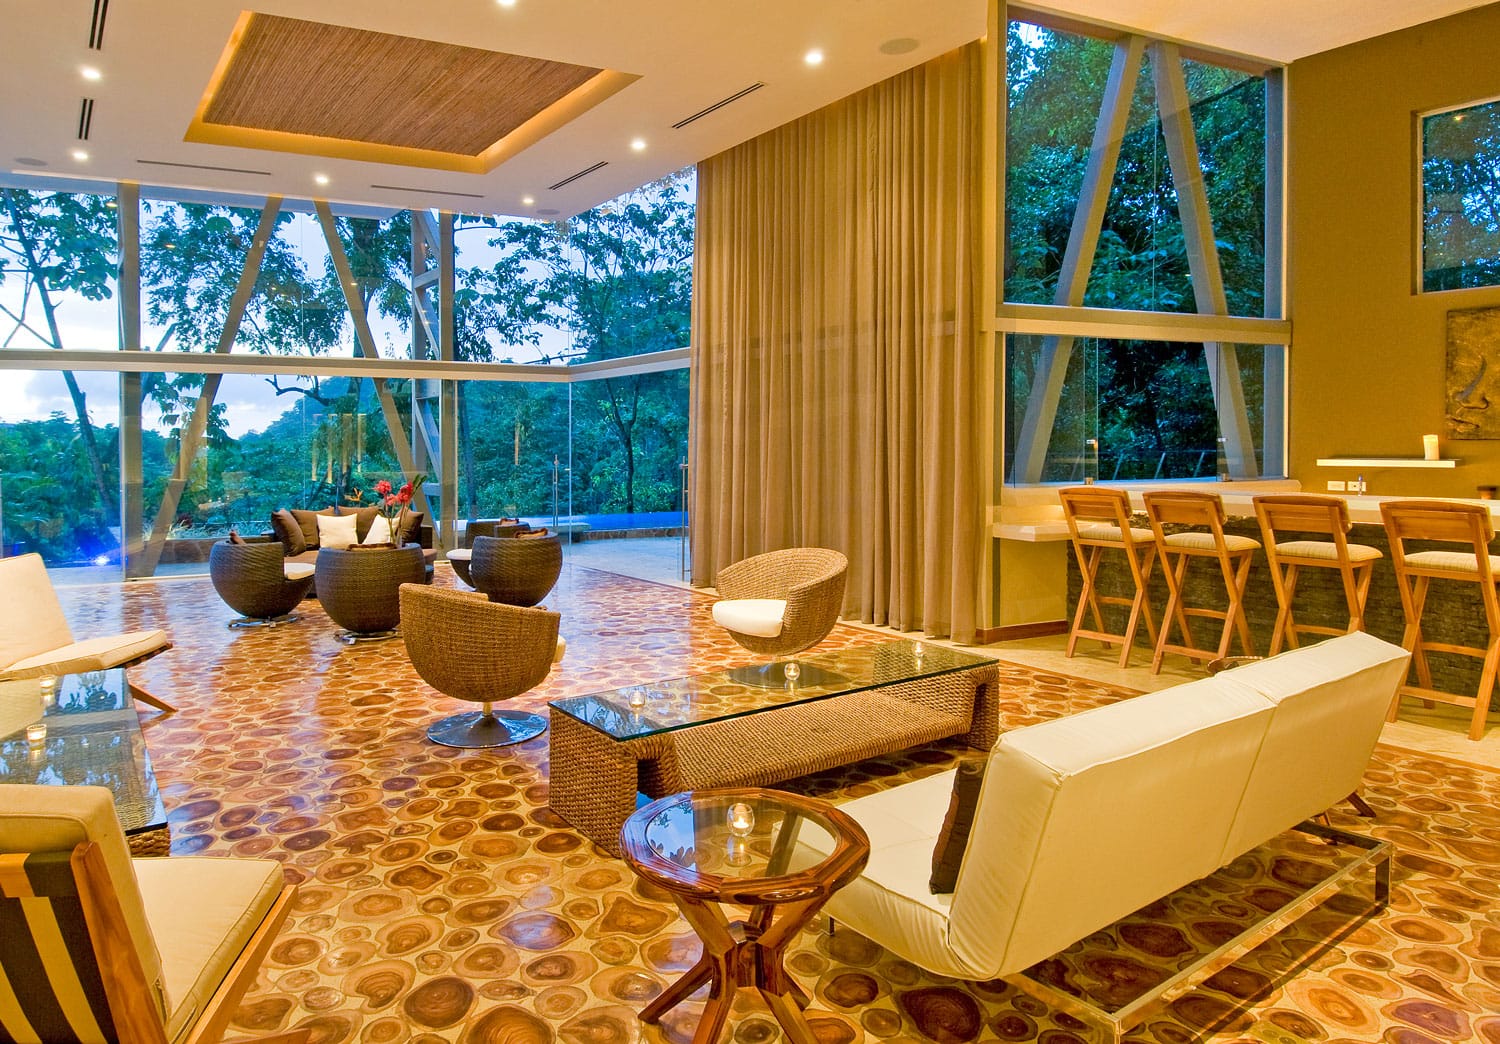 Luxury Villa Lobby in Costa Rica